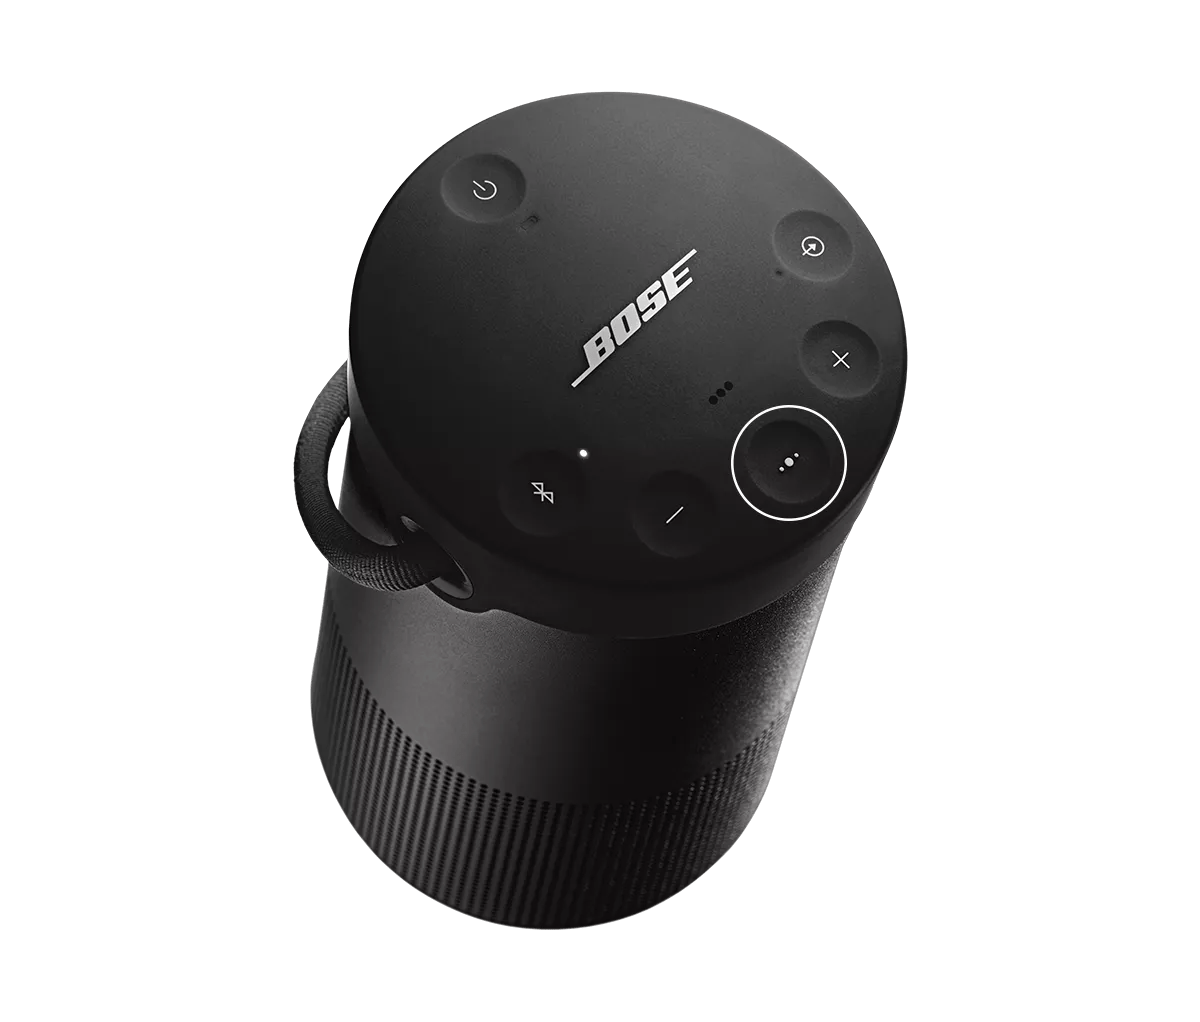 SoundLink Revolve+ II Bluetooth speaker